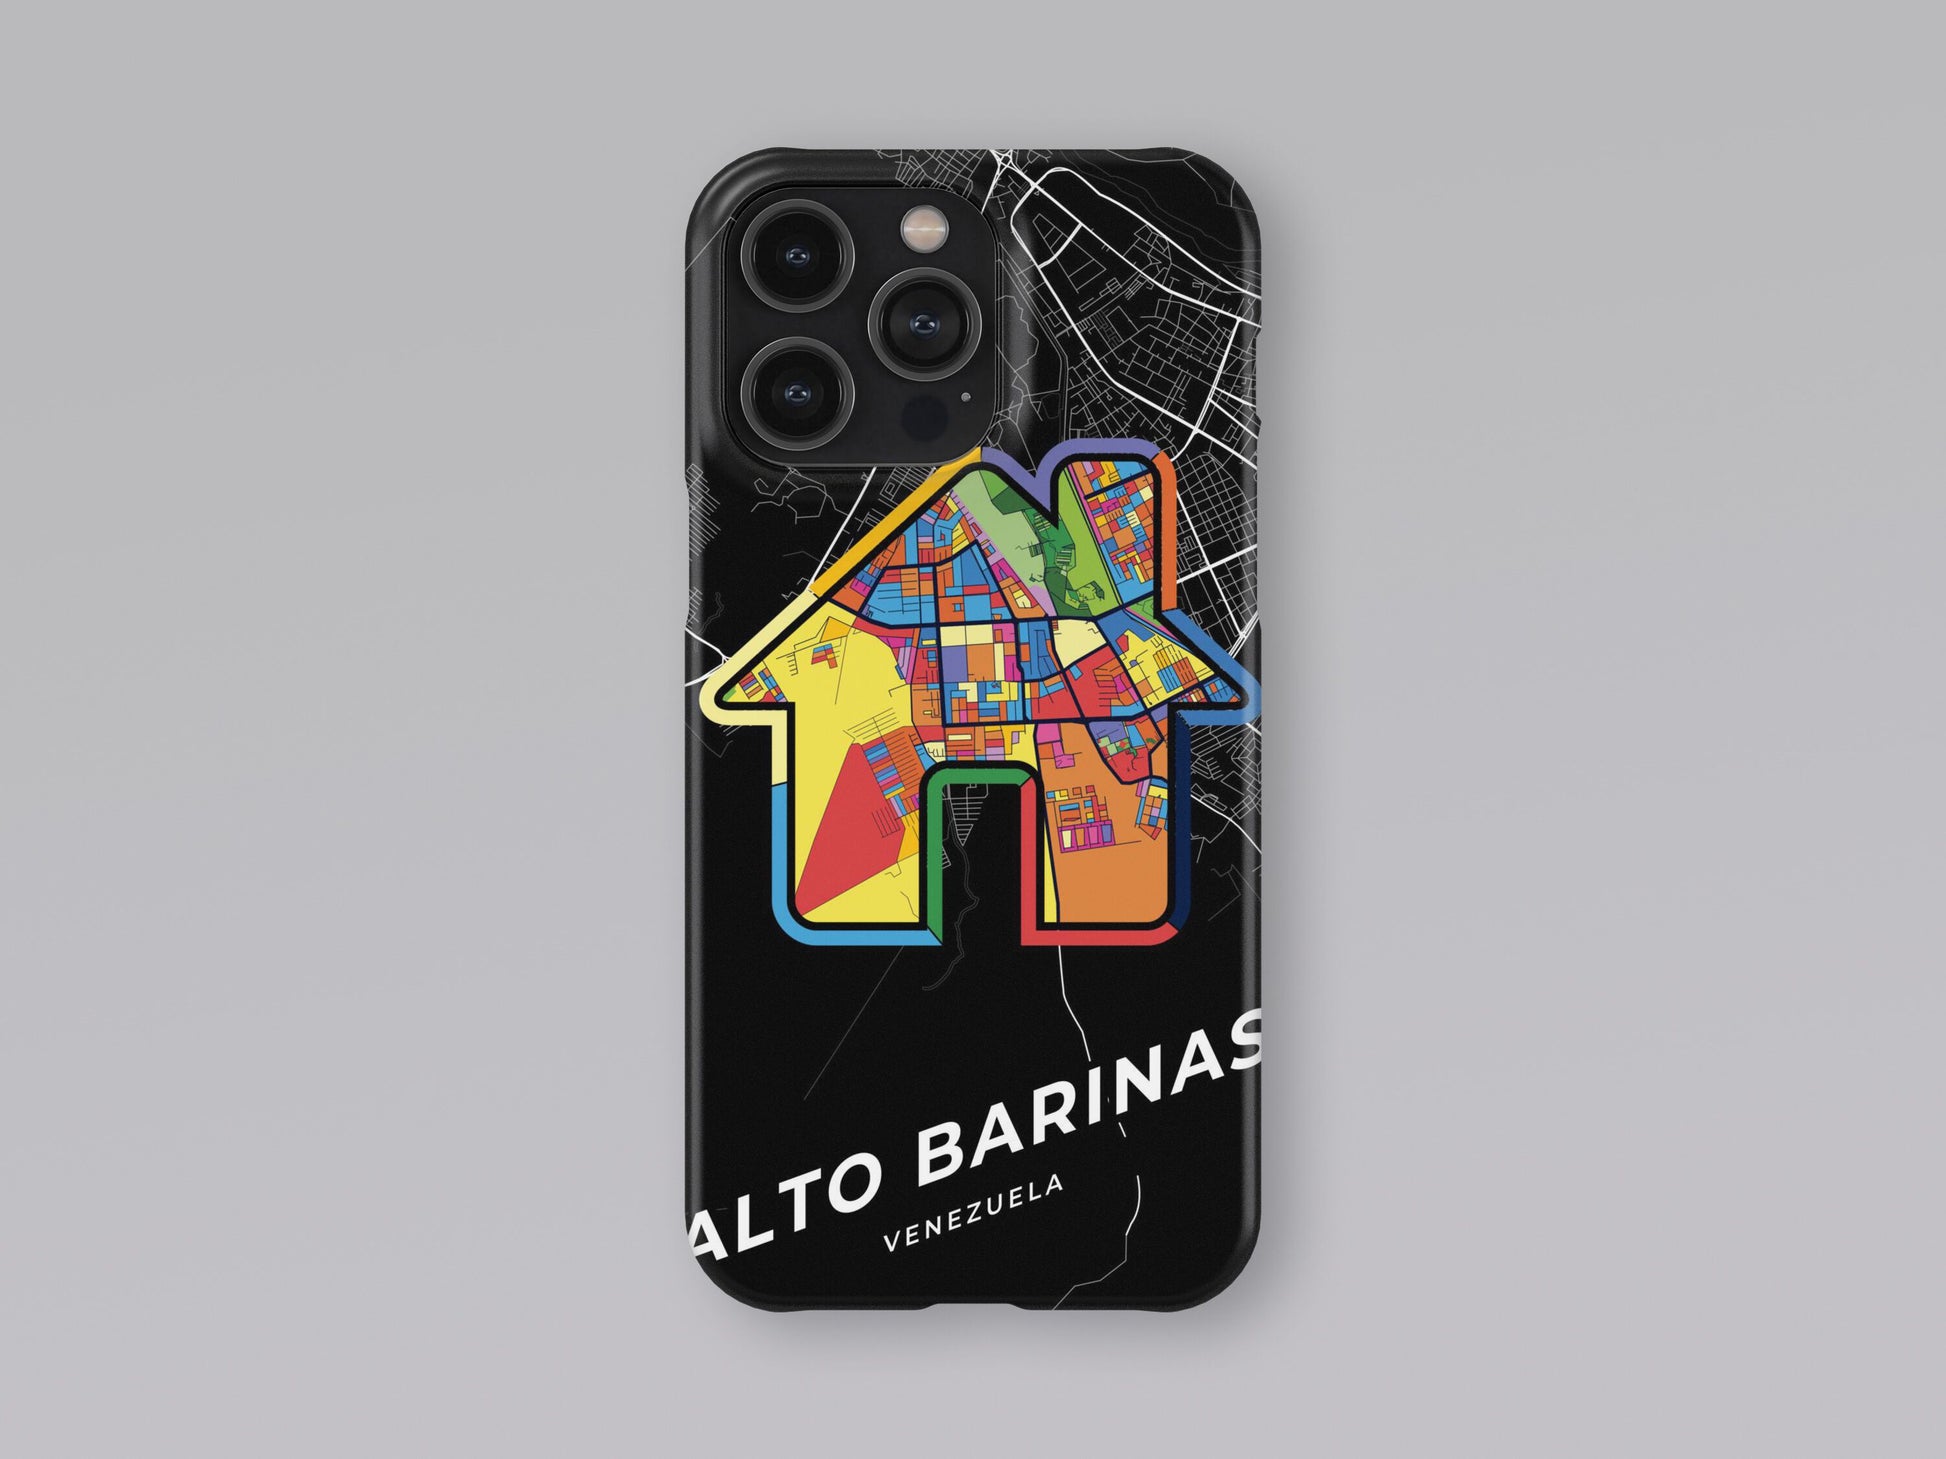 Alto Barinas Venezuela slim phone case with colorful icon. Birthday, wedding or housewarming gift. Couple match cases. 3